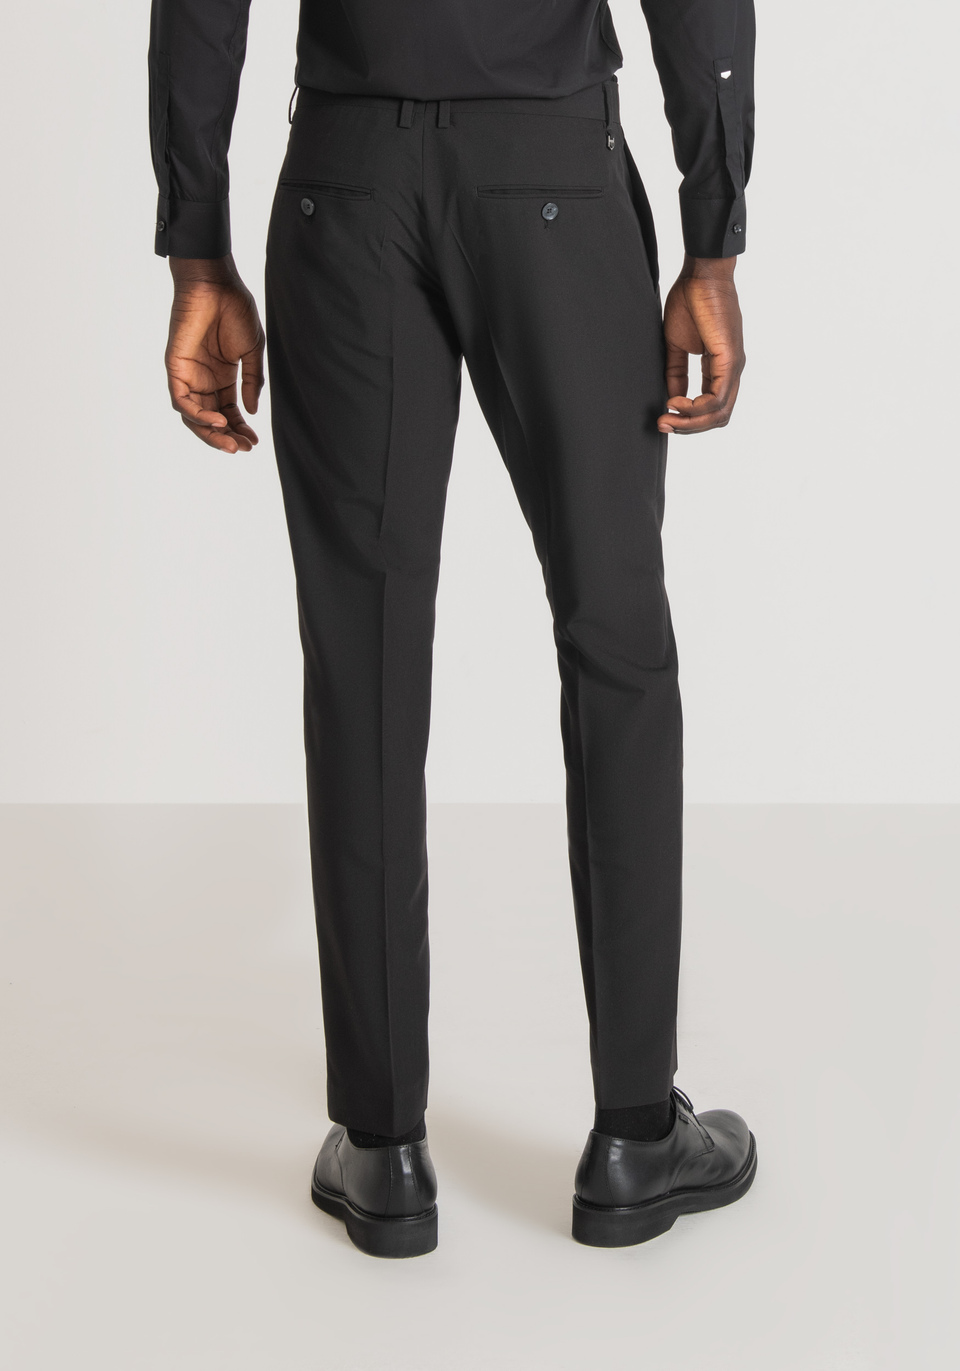 Men's Extra Slim Fit Dress Pants - Express